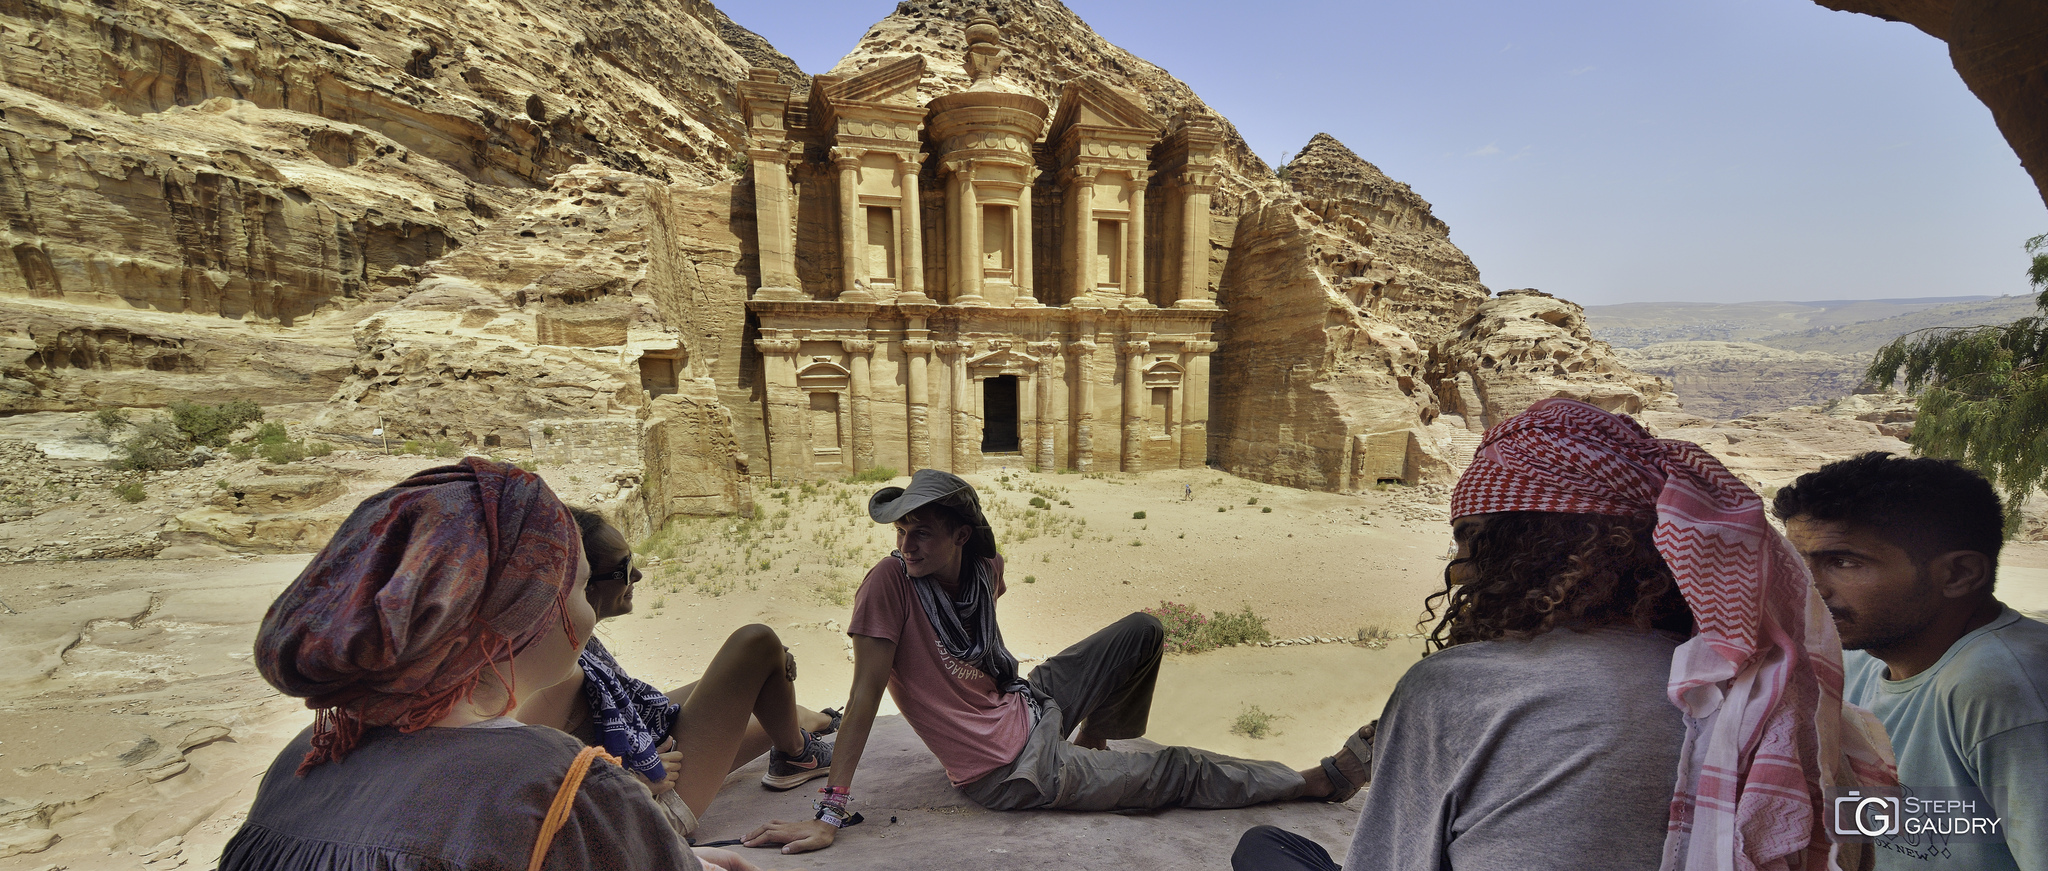 al-Deir - le monastère de Petra [Click to start slideshow]